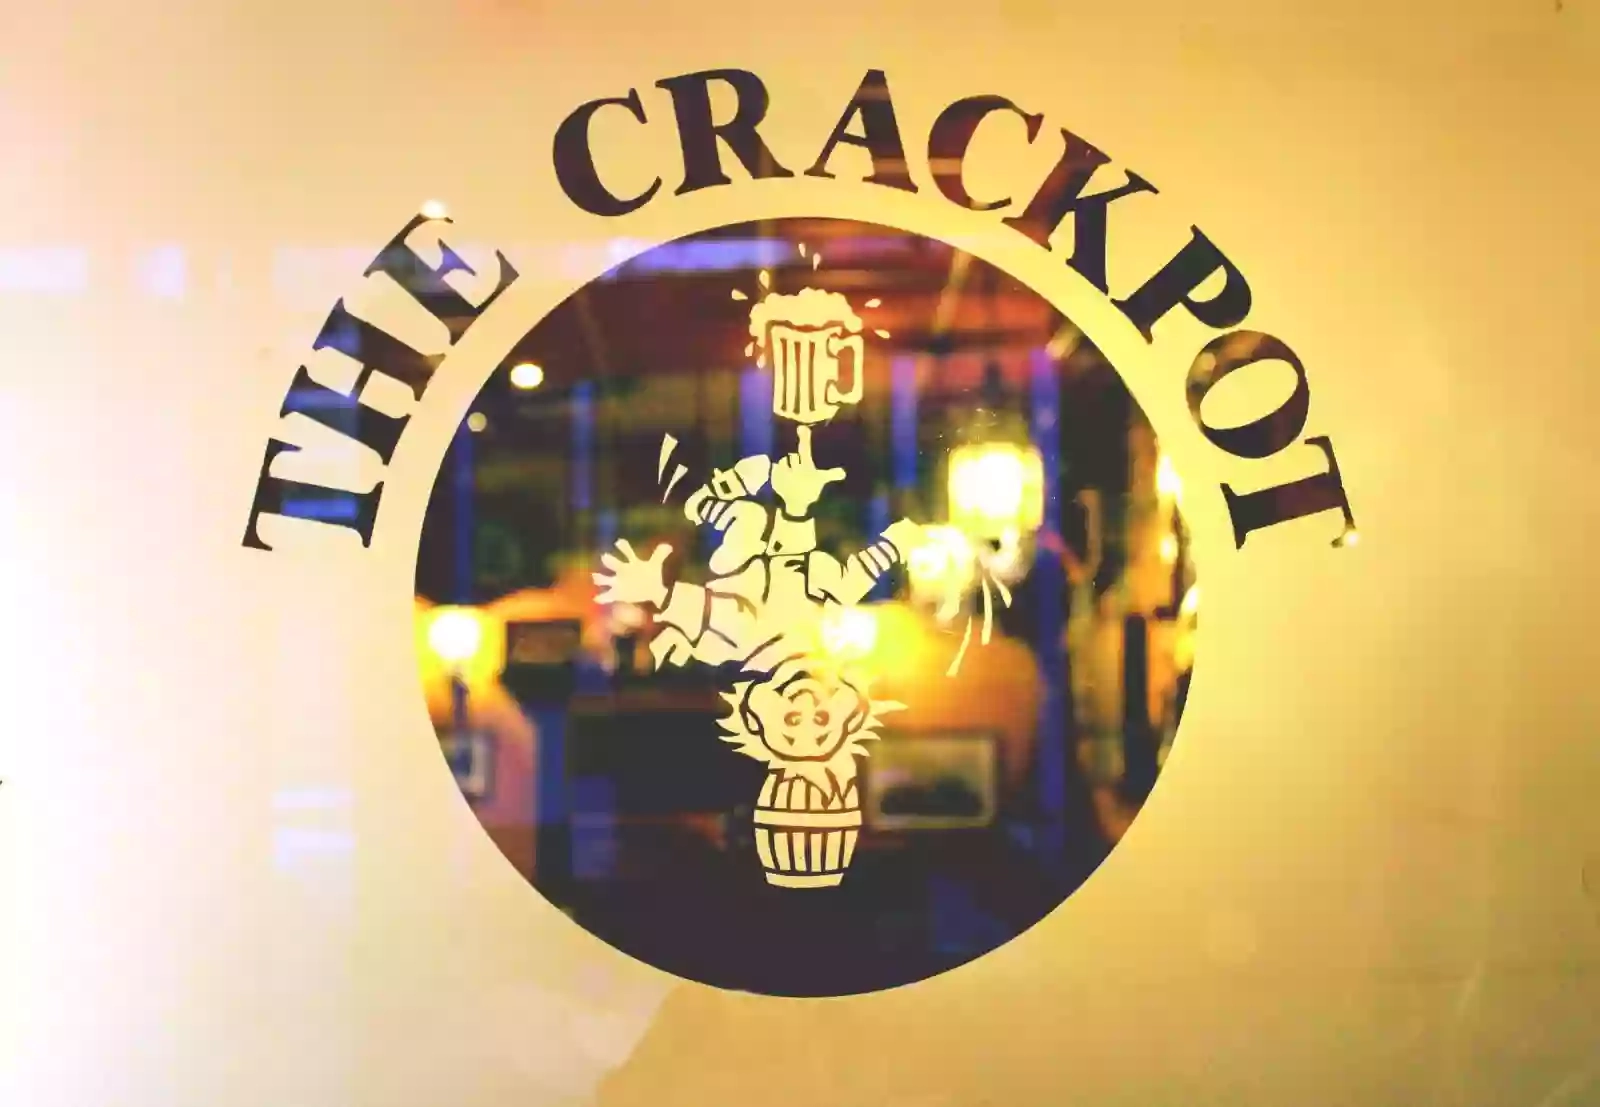 The Crackpot